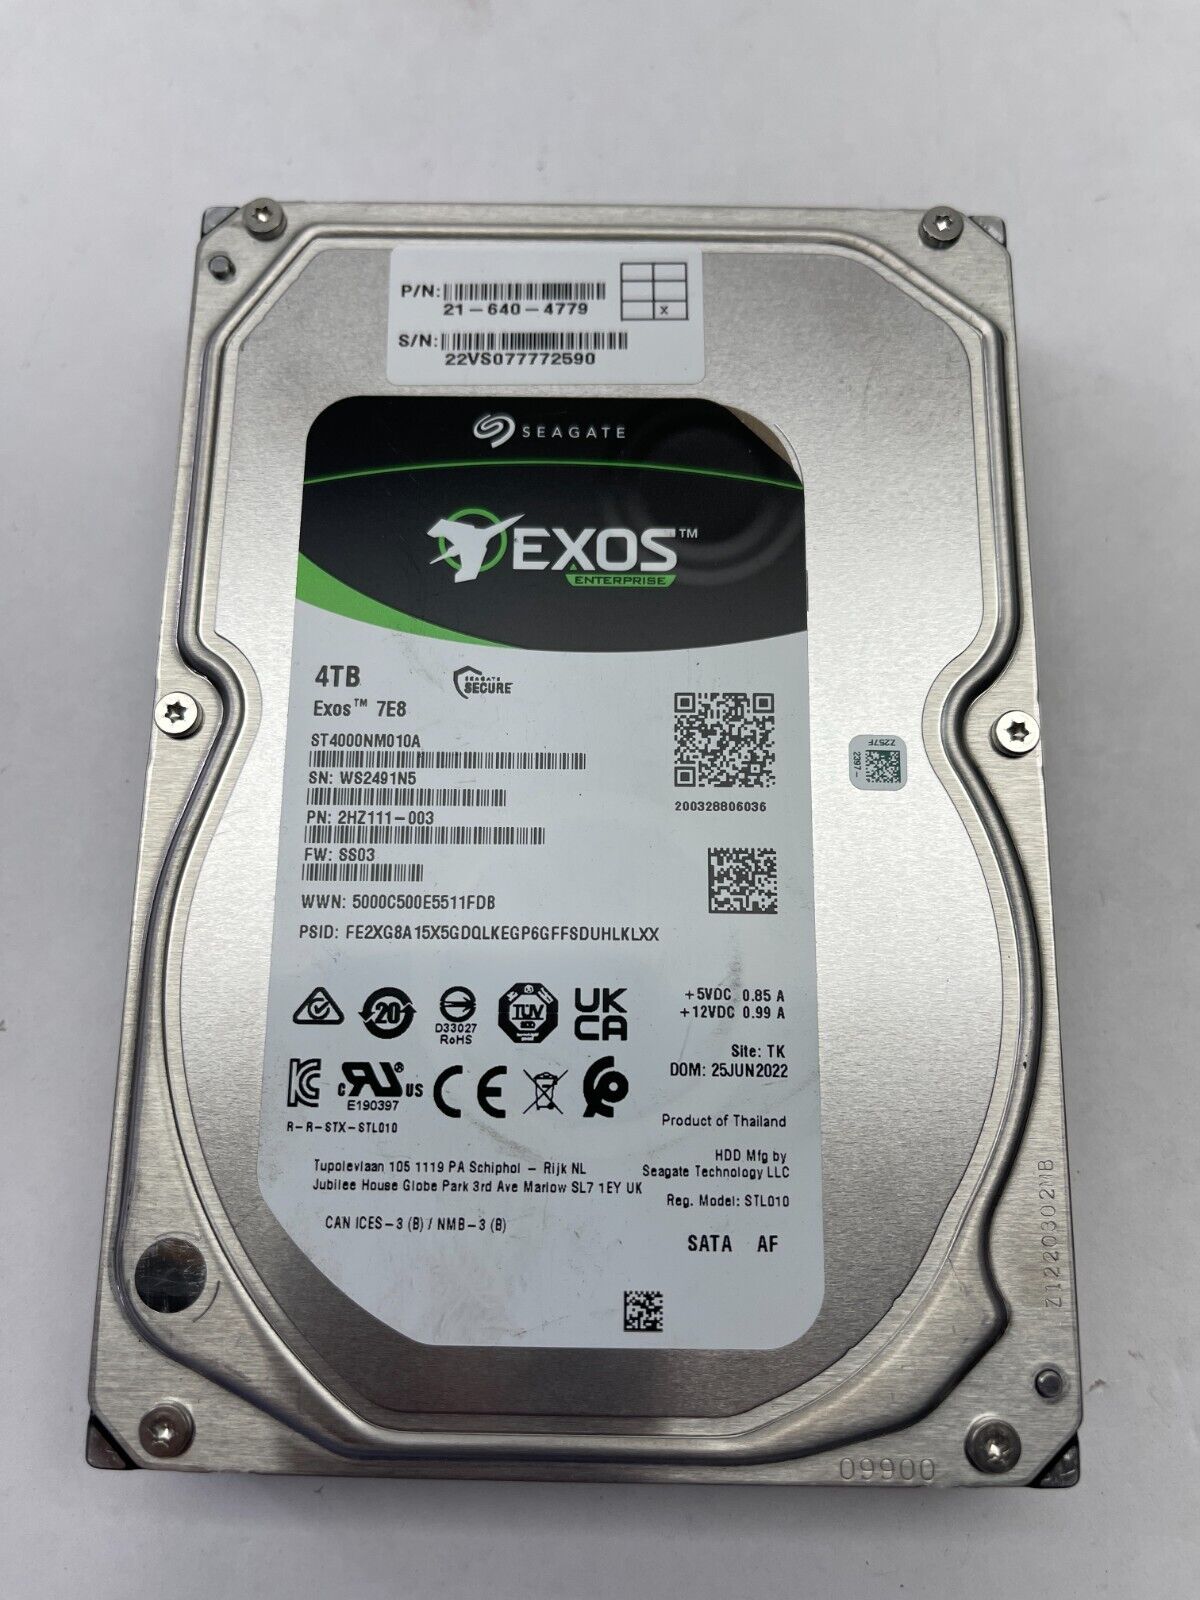 SEAGATE EXOS Enterprise 7E8 4TB ST4000NM010A STL010 Hard Drive HDD- Tested